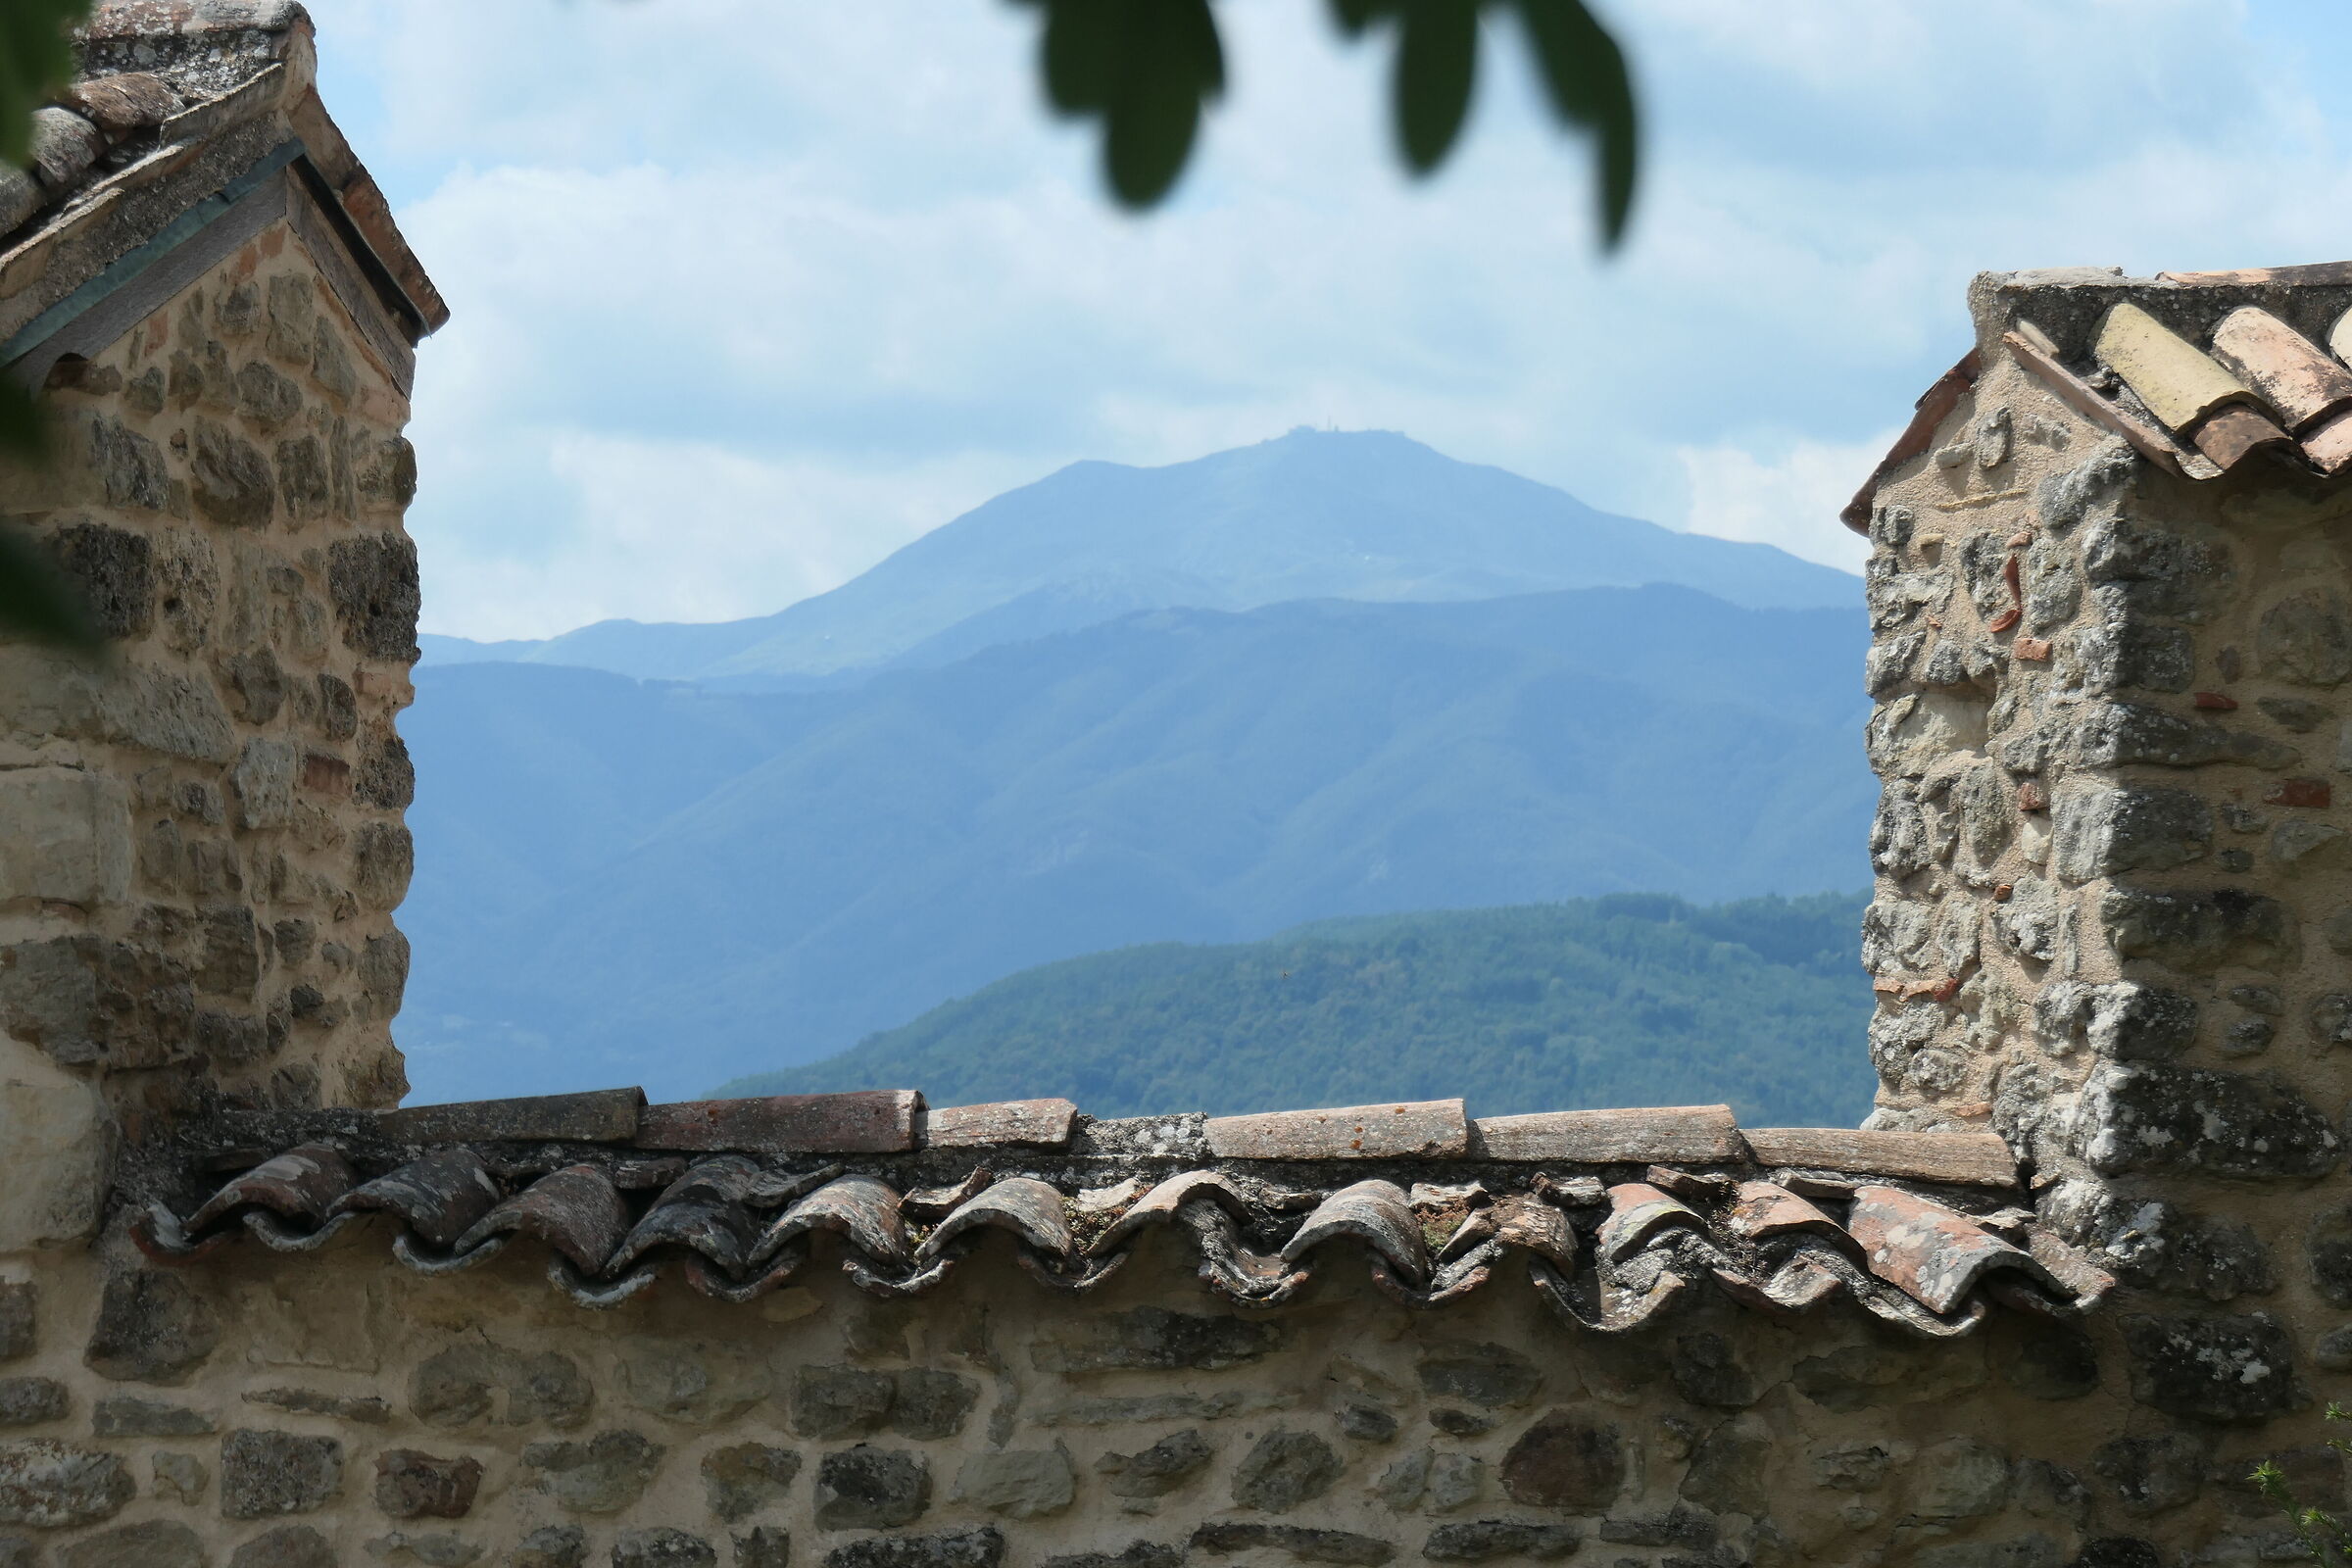 Mount Cimone seen from the Castle of Montecuccoli...